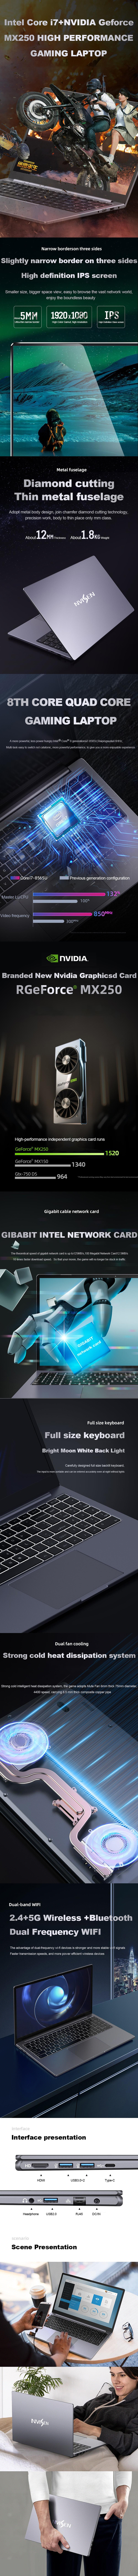 NVISEN Y-GLX253 15.6 inch Intel i7-8565U NVIDIA GeForce MX250 8GB 1TB SSD 5mm Narrow Bezel Backlit Notebook 1